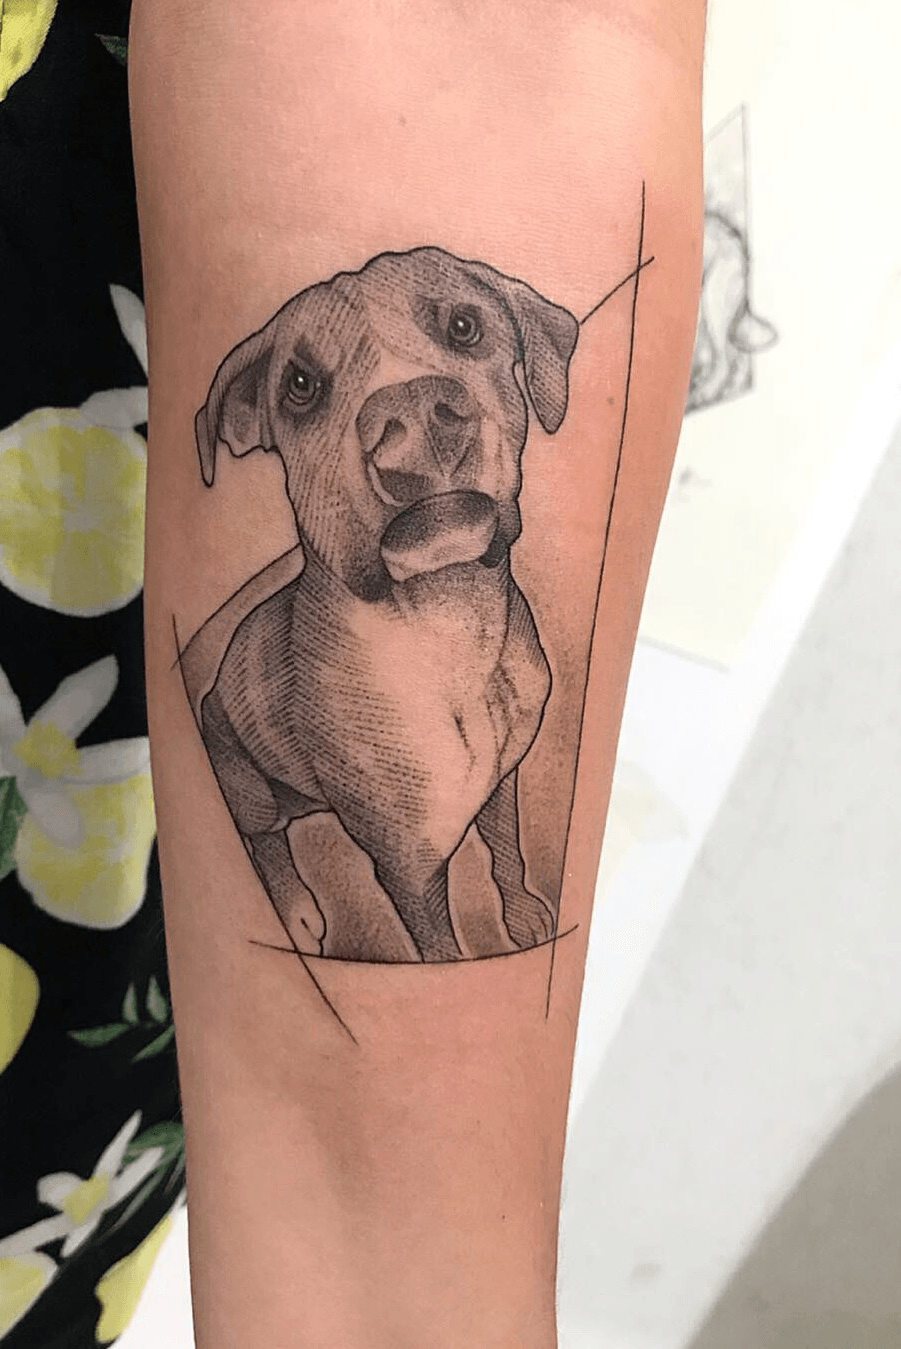 24 DogInspired Tattoos